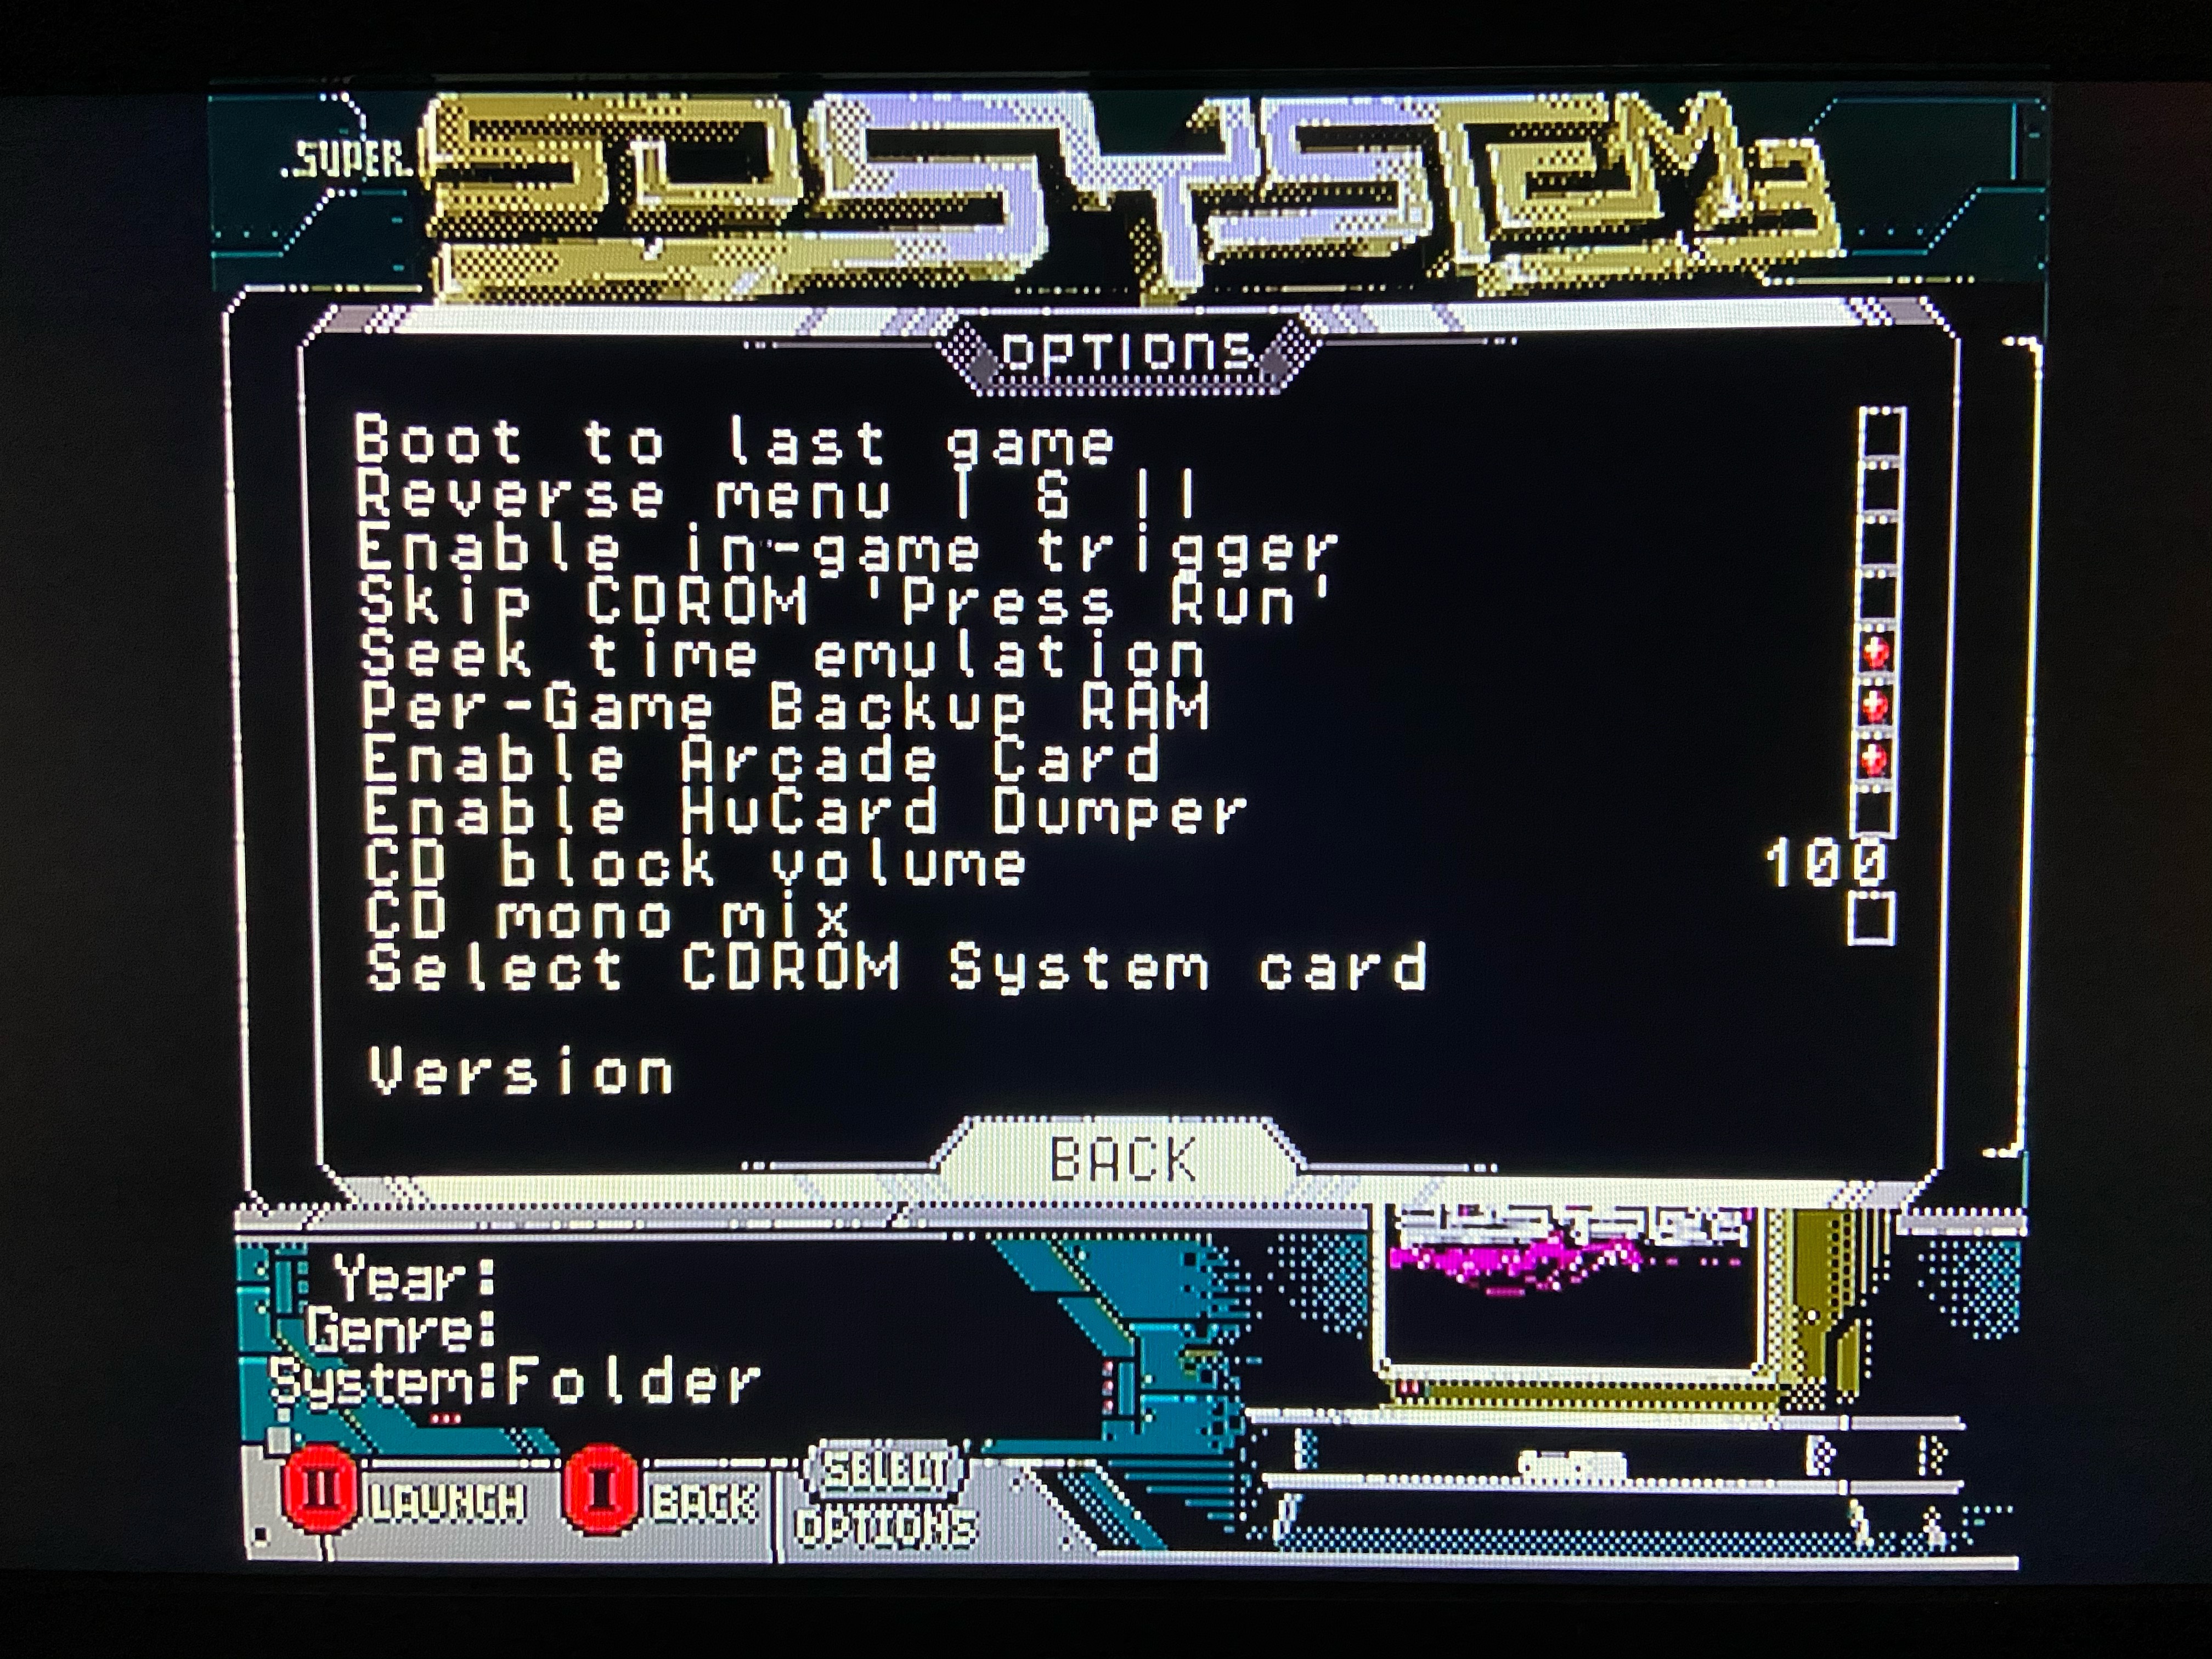 SD System 3 menu